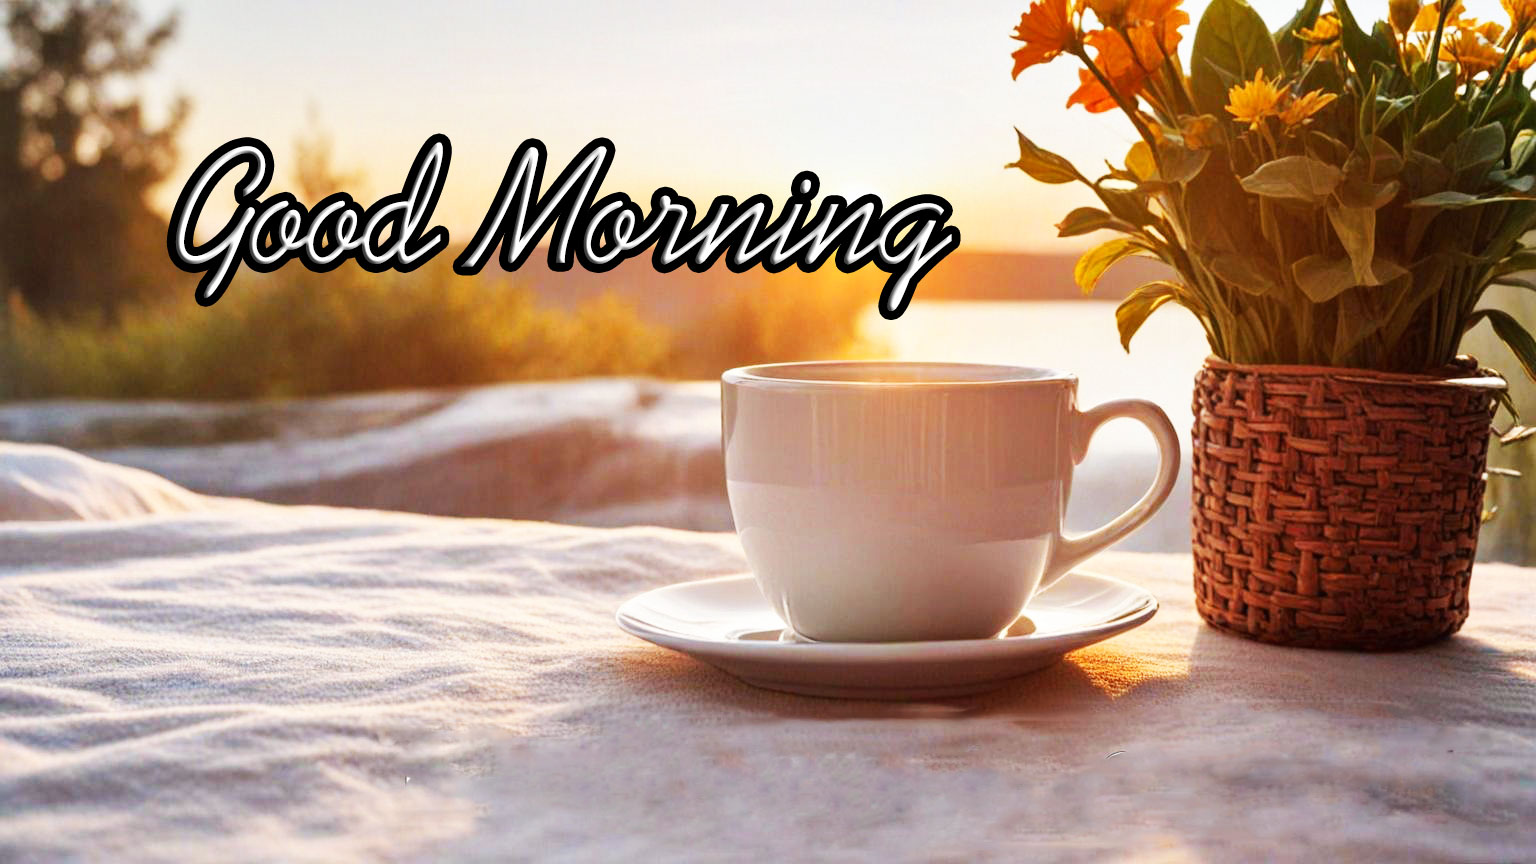 download good morning tea cup flower images